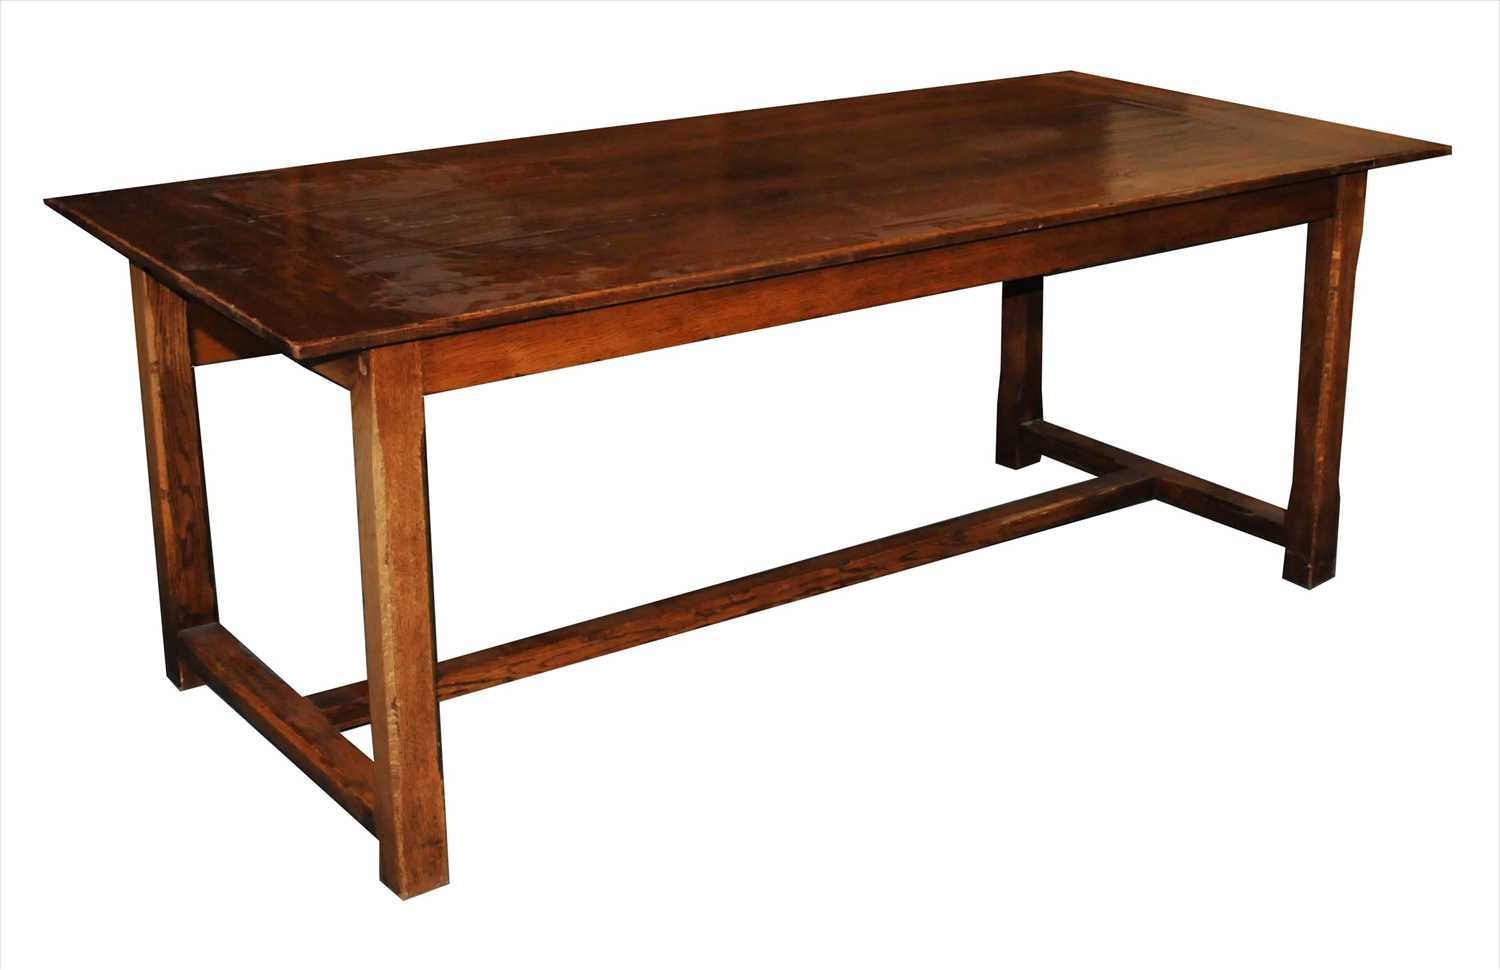 Lot 770 - A reproduction rustic oak refectory table